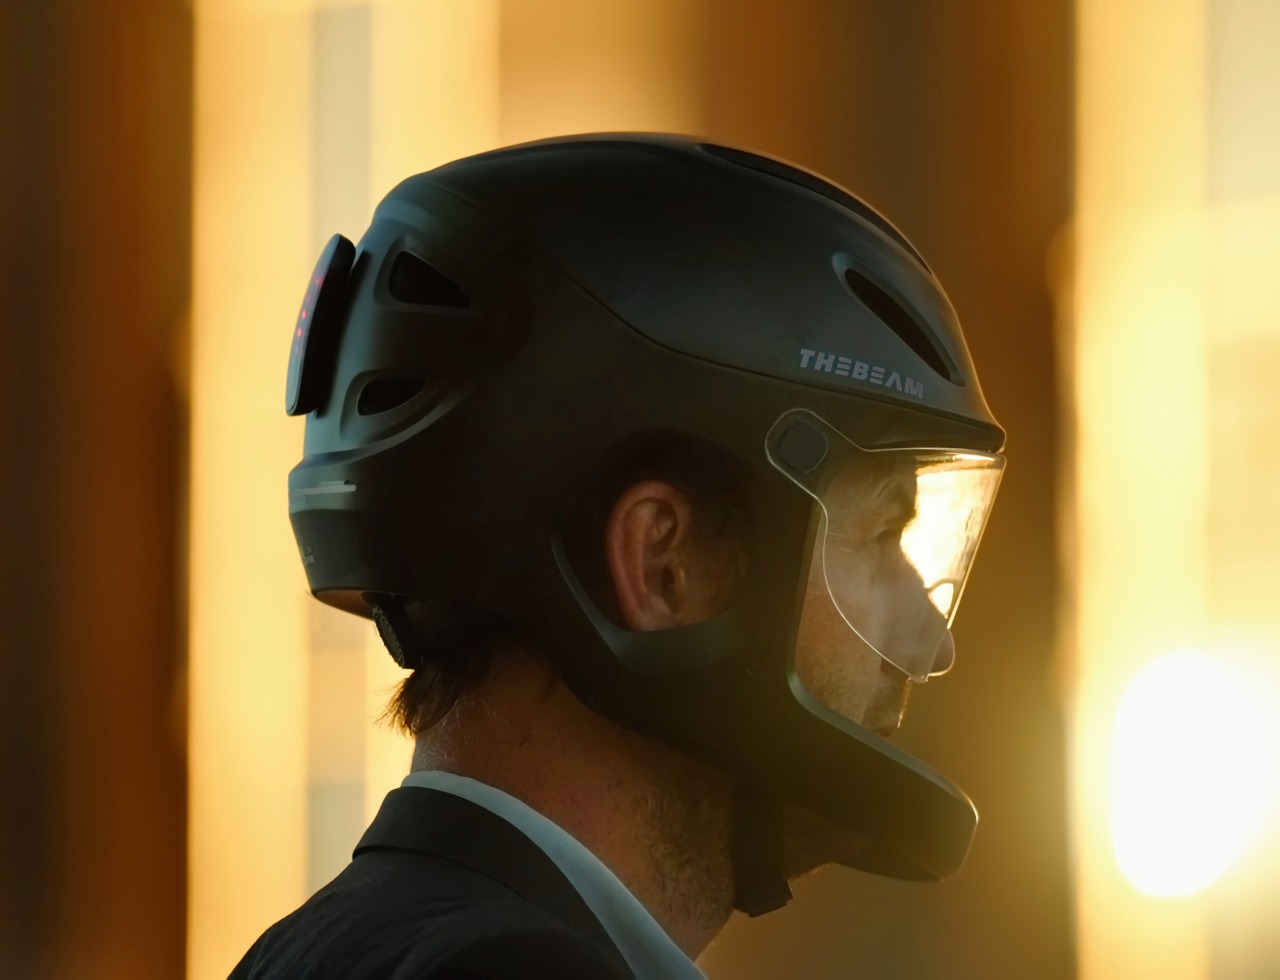 Casque de Vélo Intelligent - Gamel Helmets